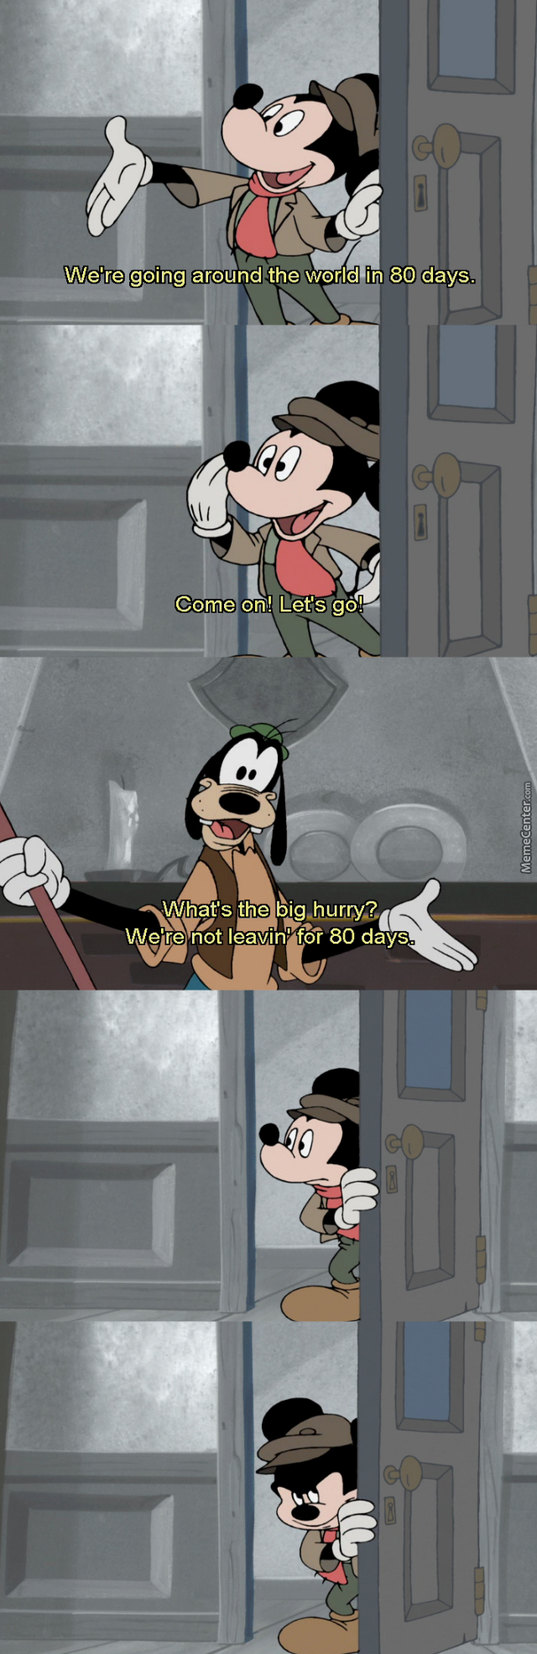 Mickey mouse - meme